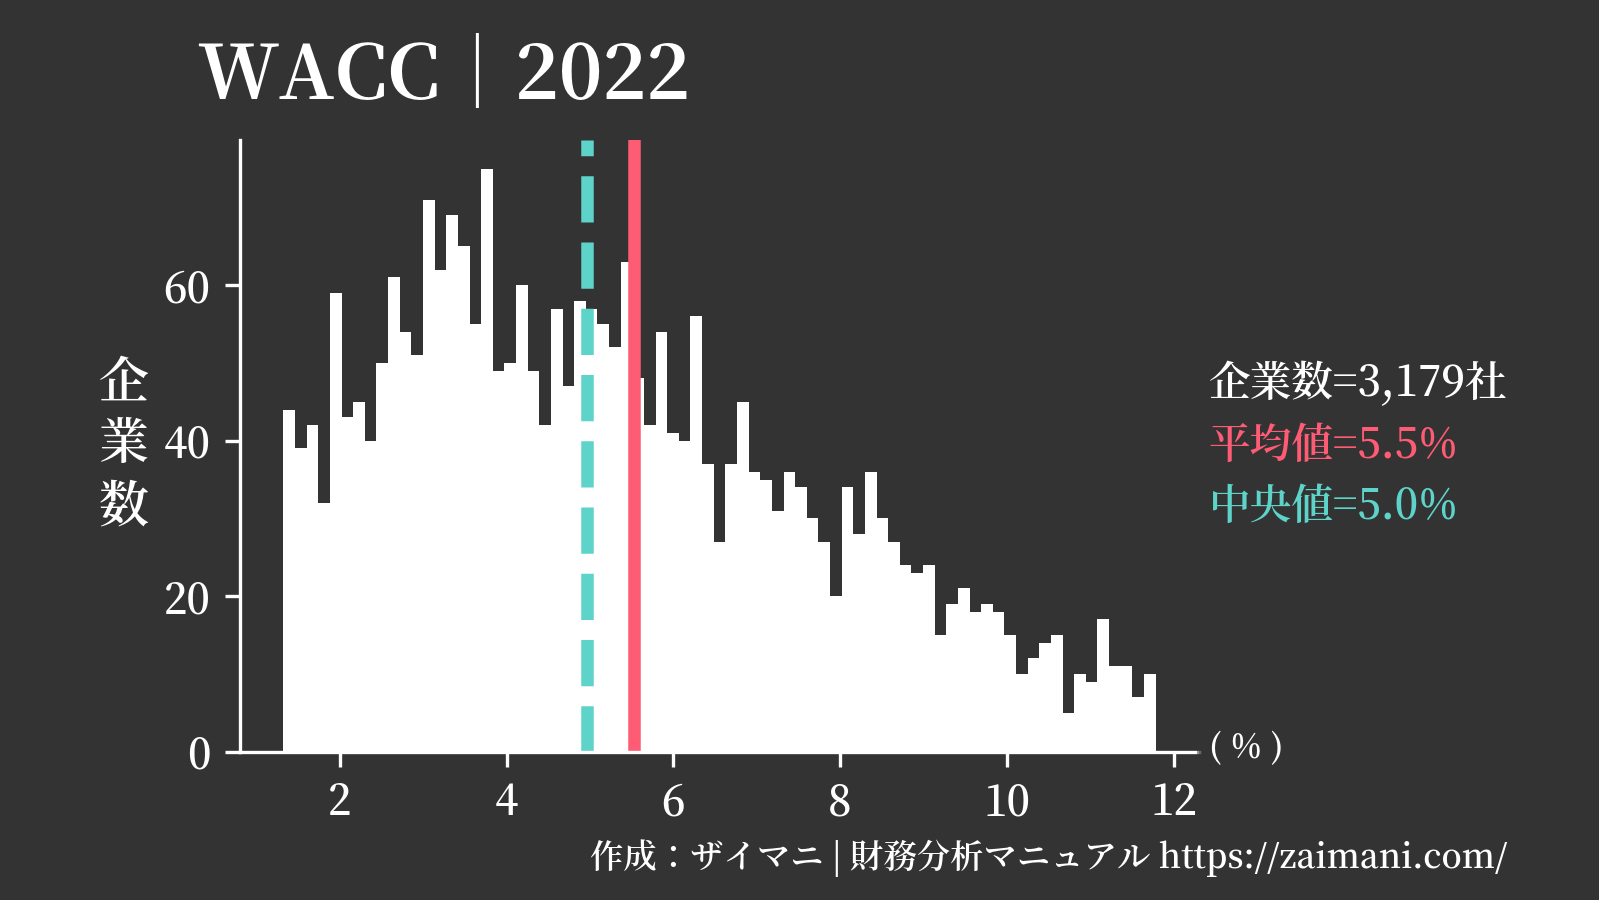 WACC(2022)の全業種平均・中央値